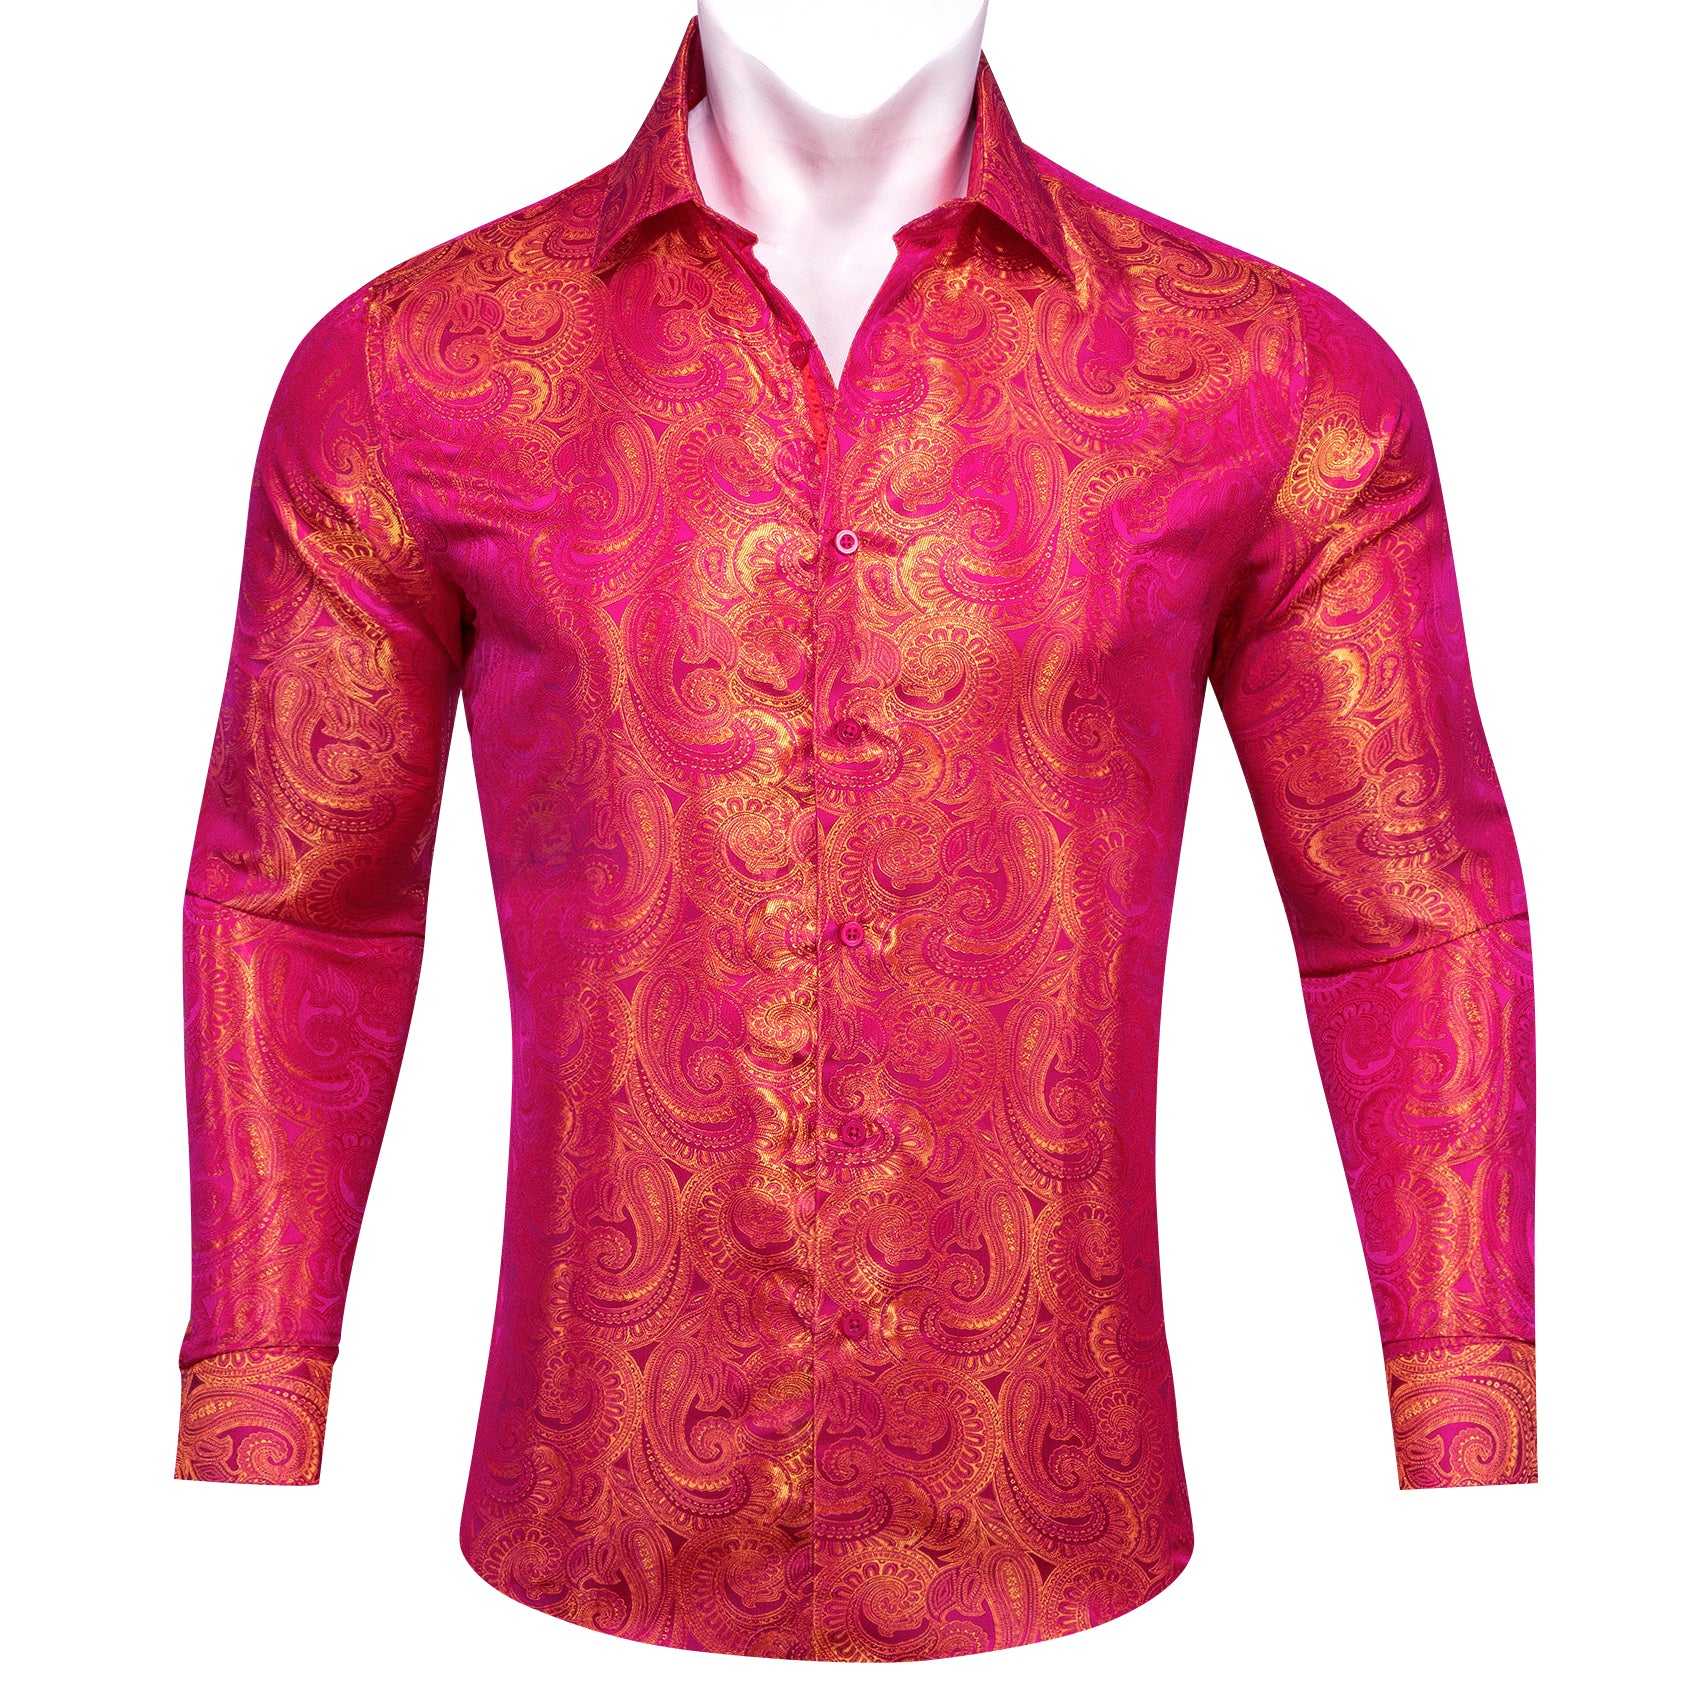 Barry.wang Button Down Shirt Red Orange Woven Paisley Silk Men's Shirt